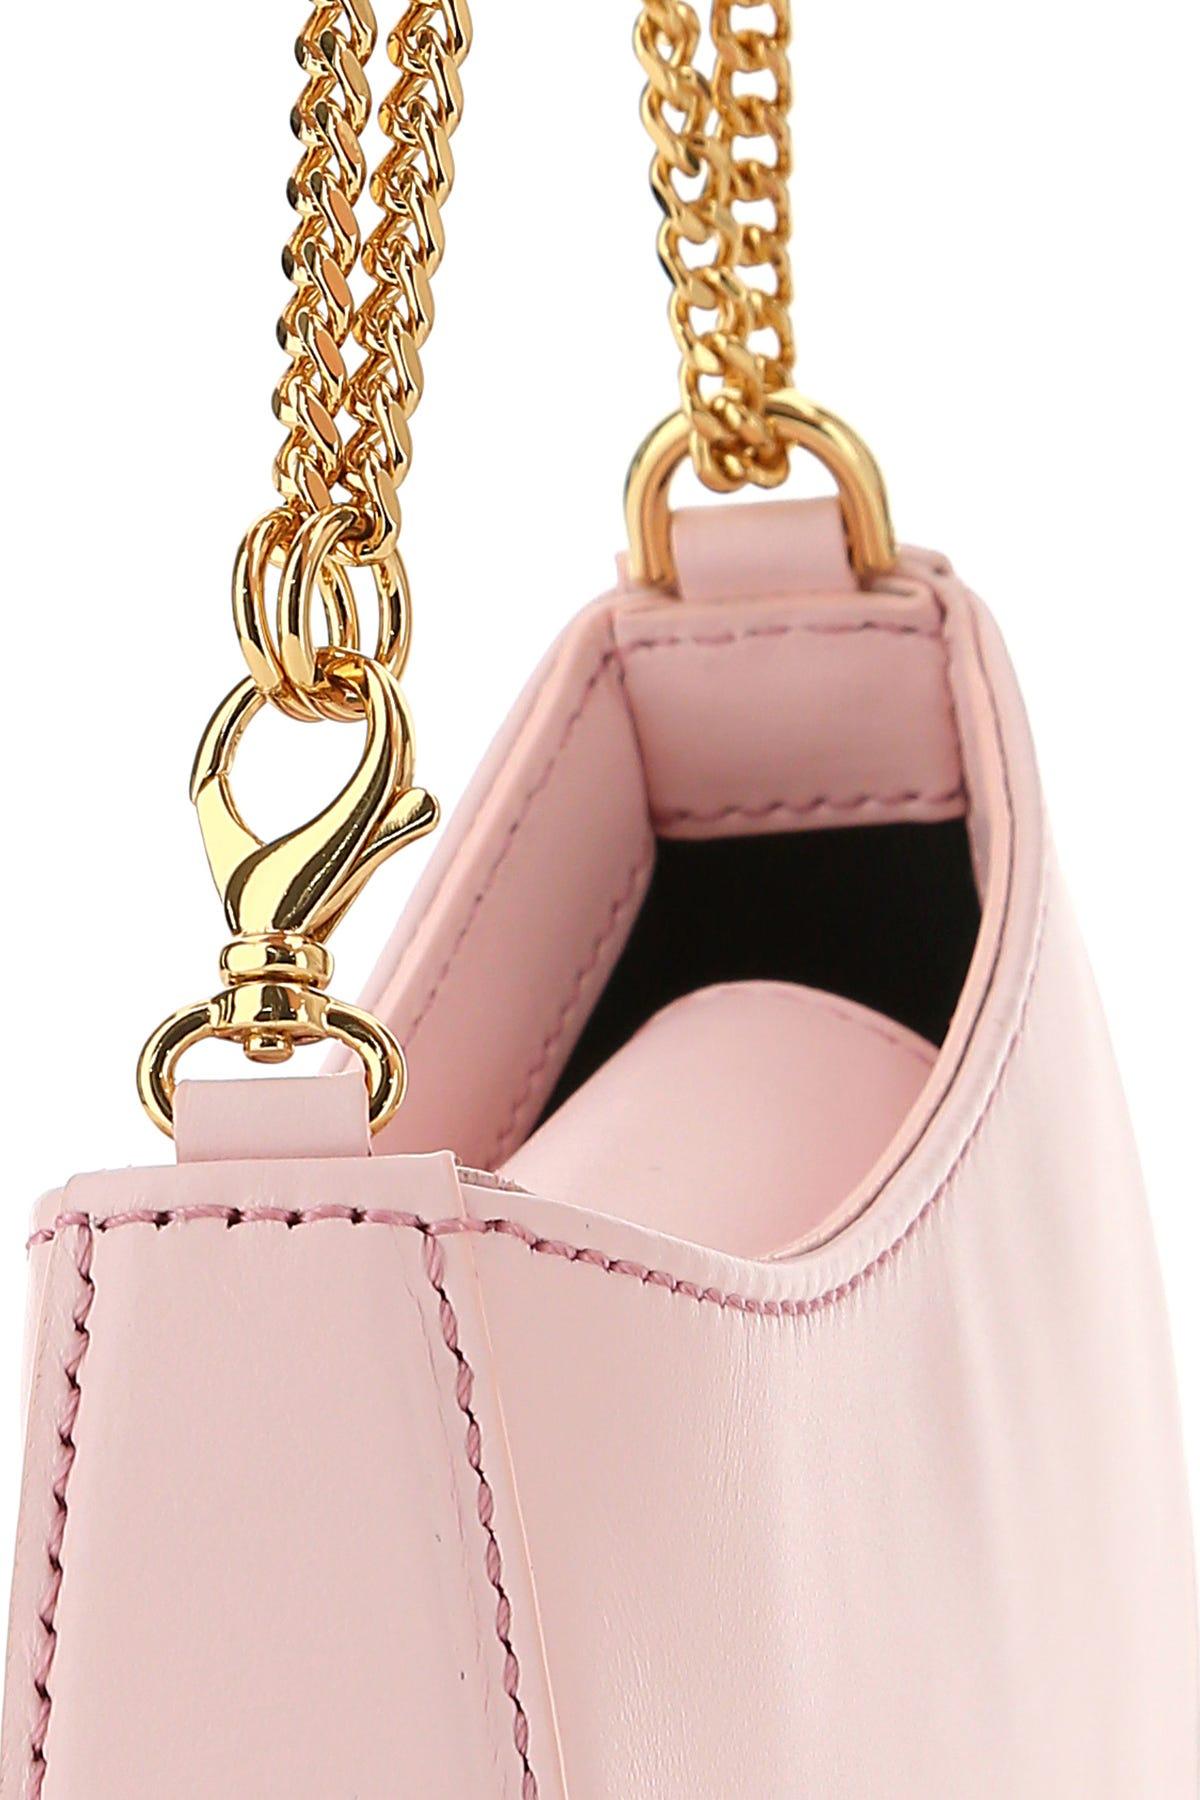 Lanvin Sugar Mini Ostrich-effect Leather Cross-body Bag in Pink